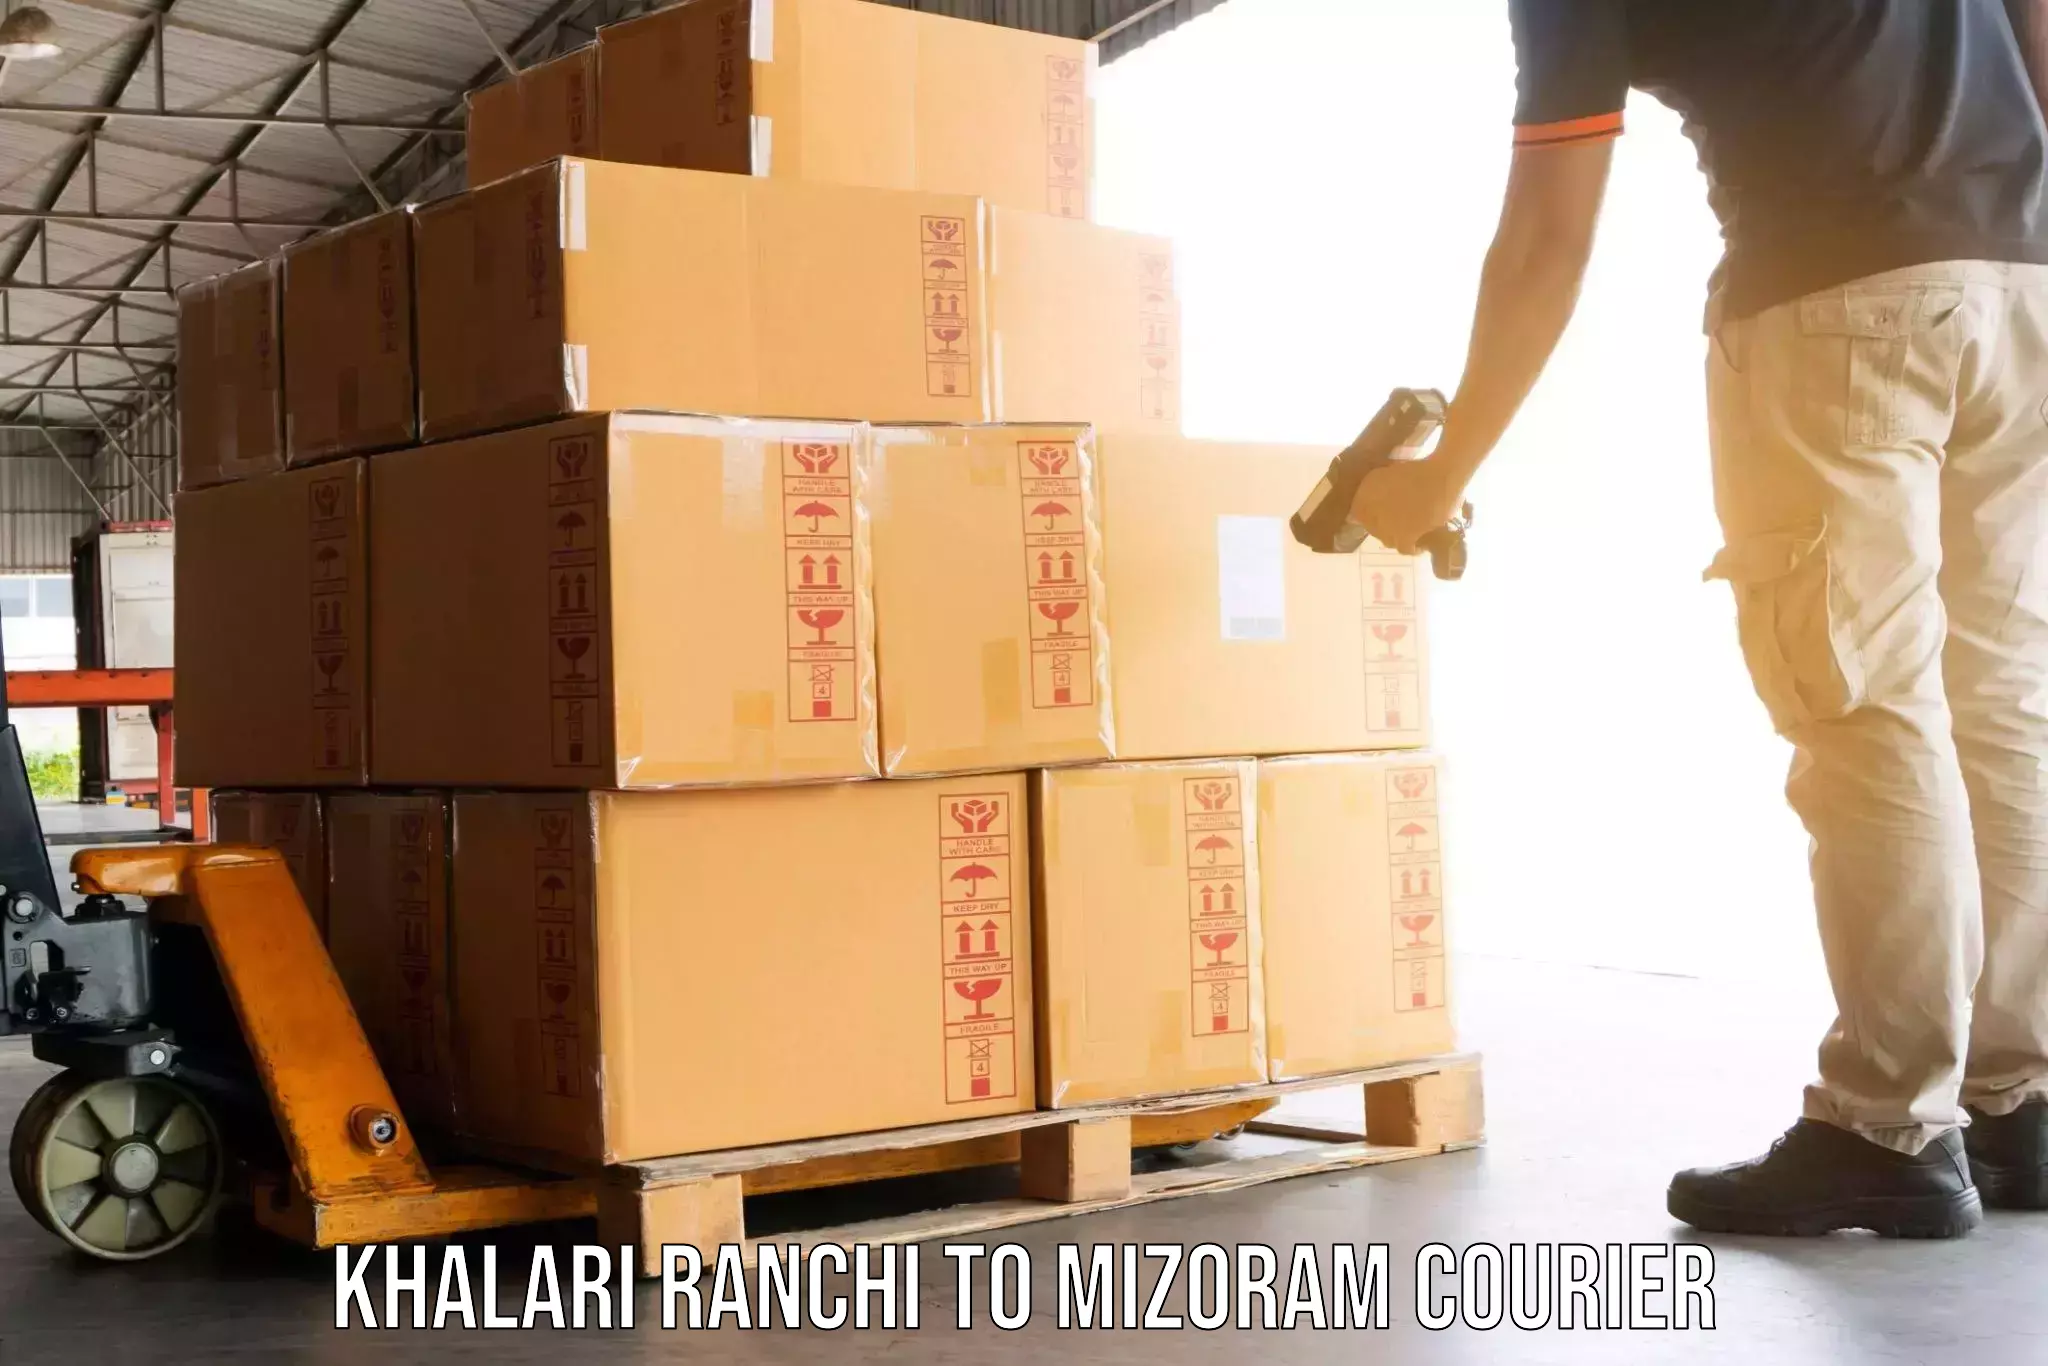 Professional moving assistance Khalari Ranchi to Aizawl